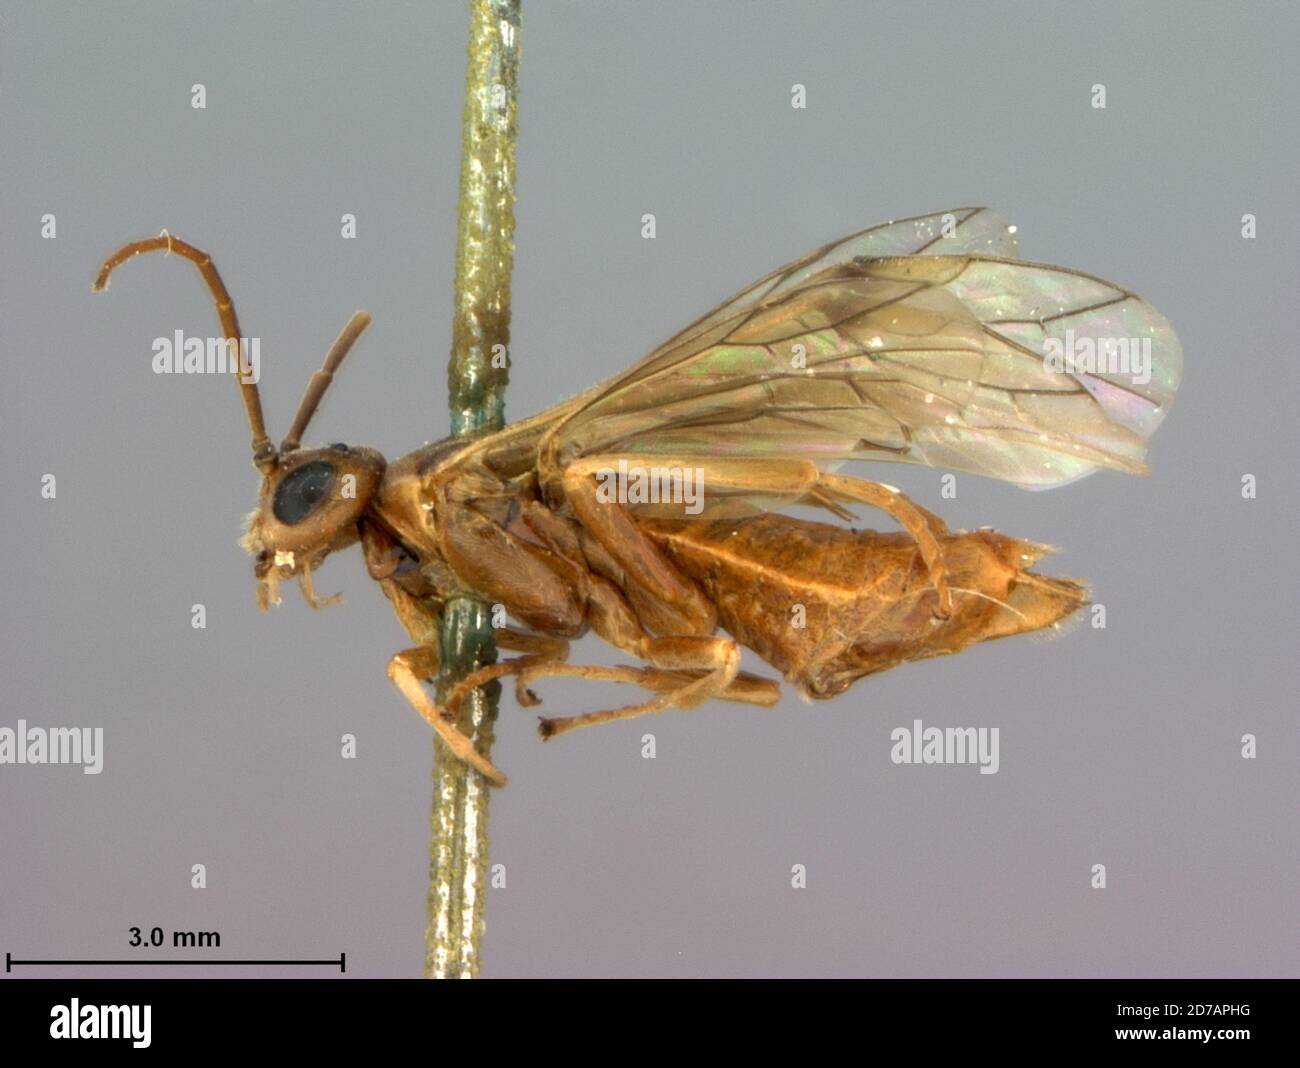 California, United States, Nematus unicolor Marlatt, 1896, Animalia, Arthropoda, Insecta, Hymenoptera, Symphyta, Tenthredinidae Stock Photo